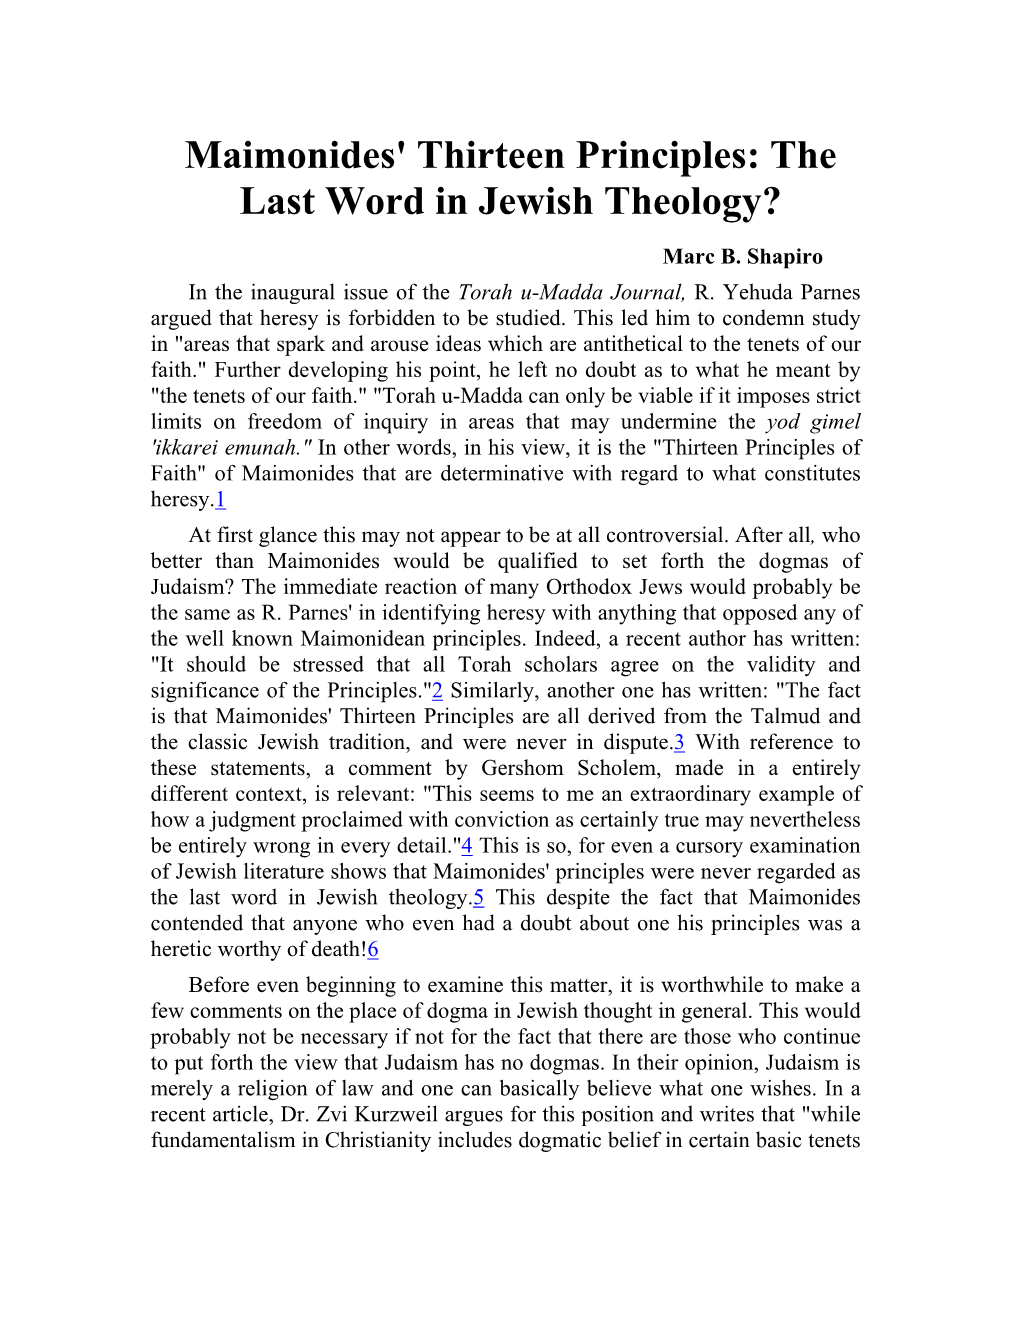 Maimonides' Thirteen Principles: the Last Word in Jewish Theology?